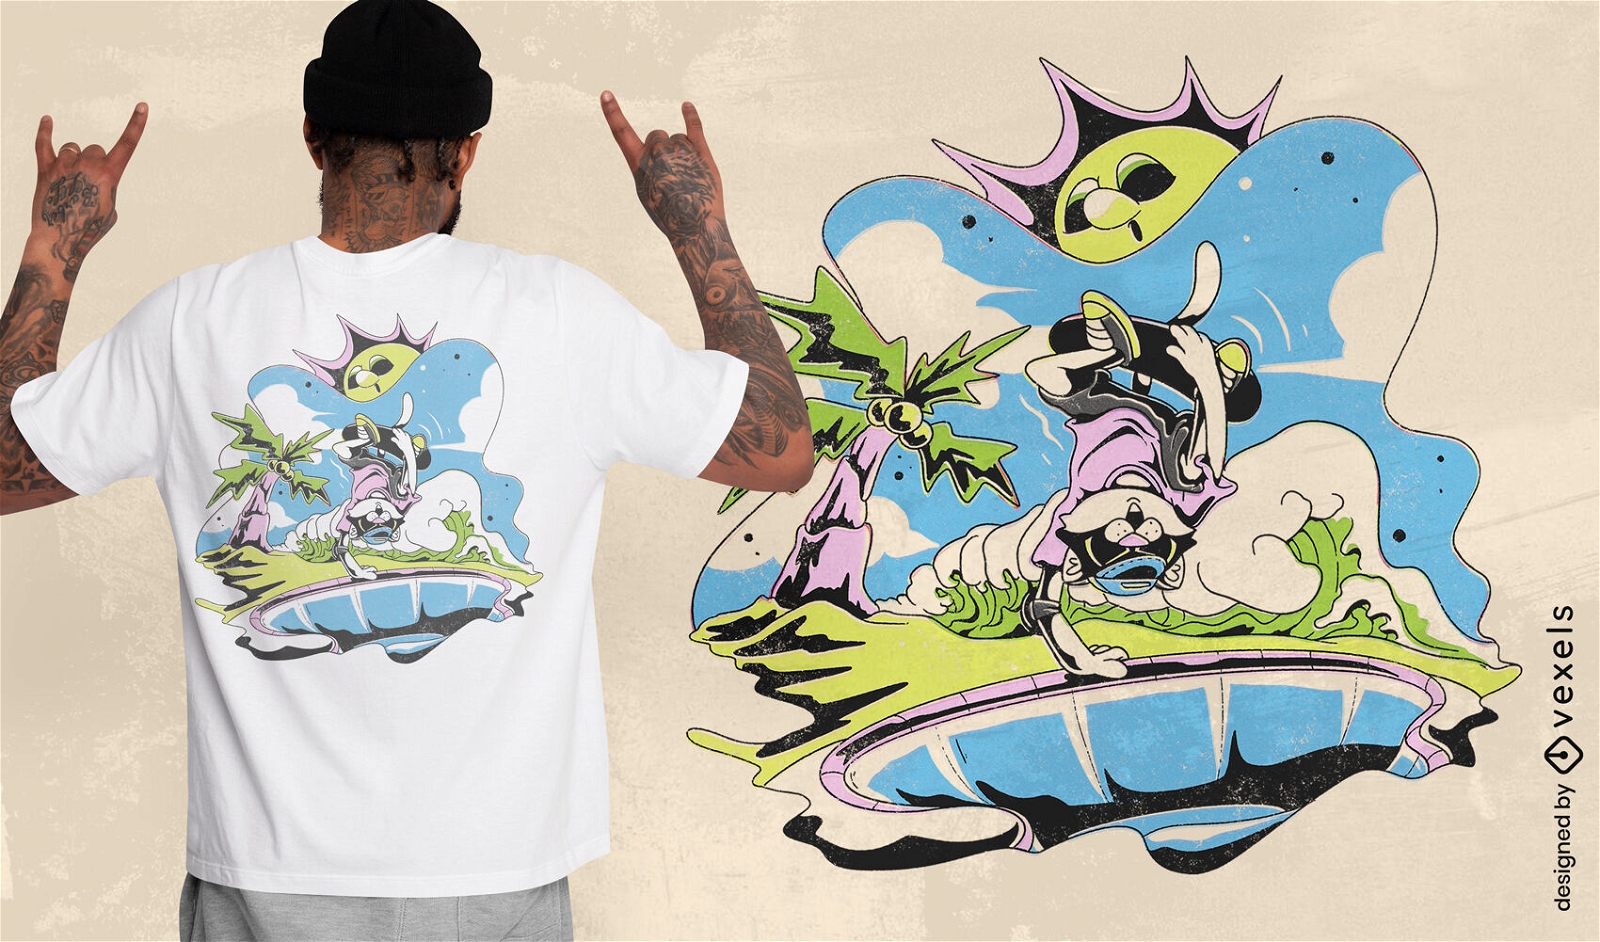 Skateboarding cat tricks t-shirt design